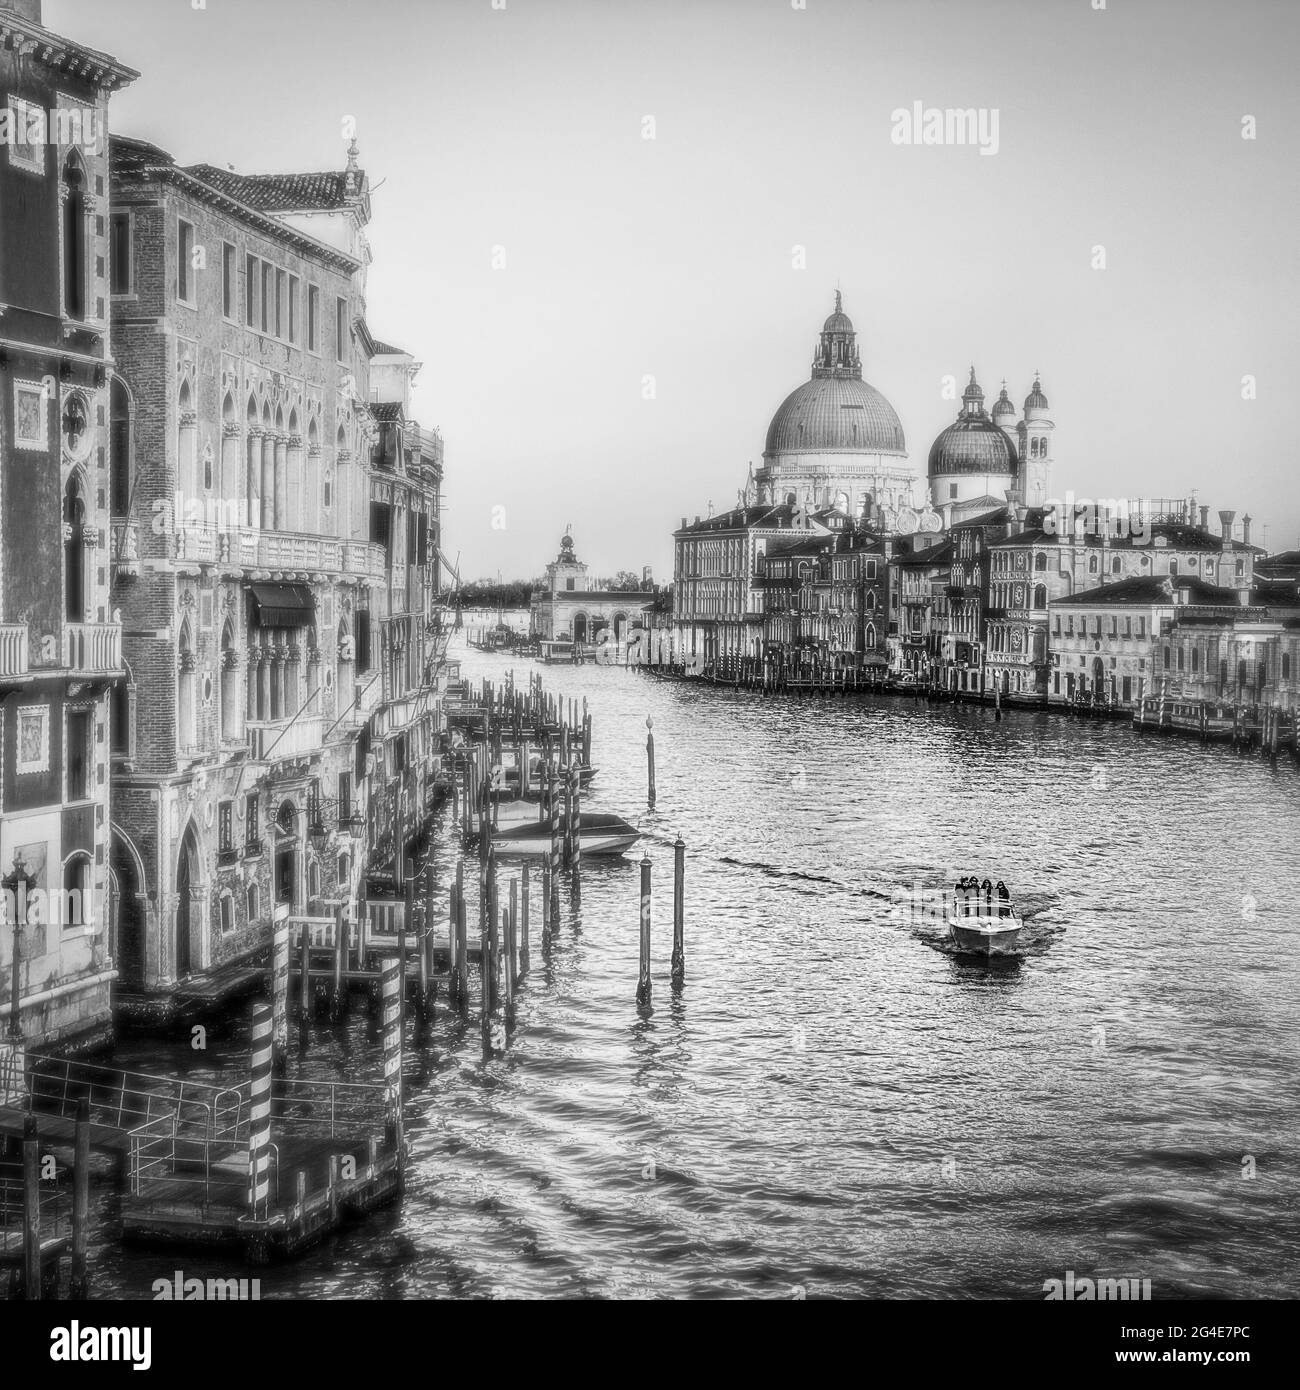 View of the Grand Canal and Basilica Santa Maria della Salute from the Ponte dell'Accademia in Venice, Italy Stock Photo